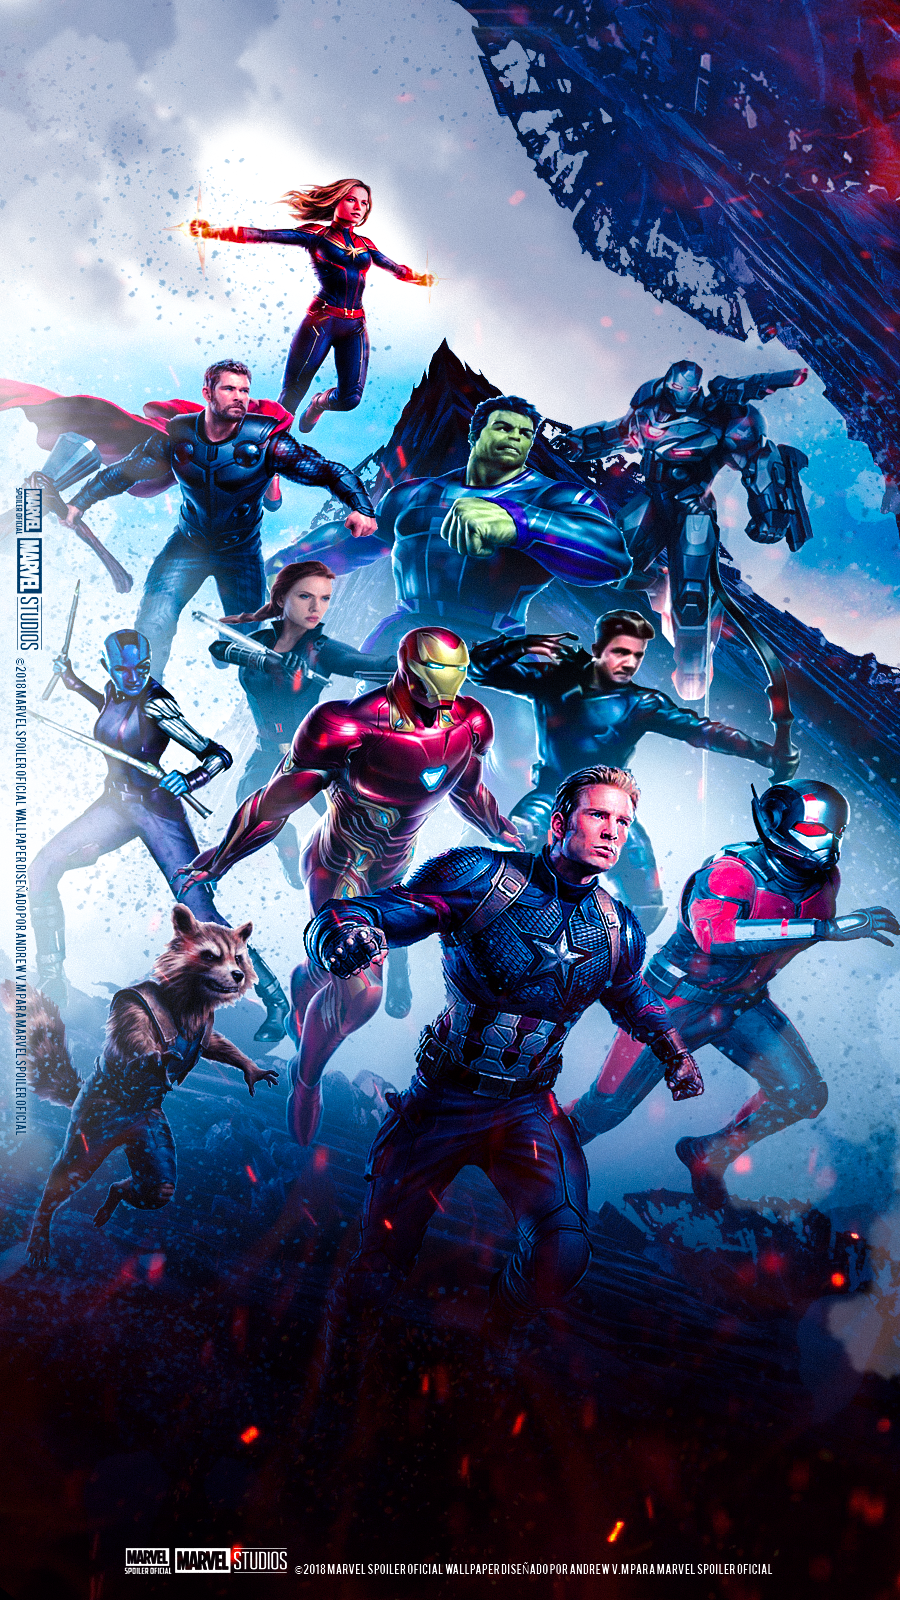 Avengers Endgame Images Hd Download